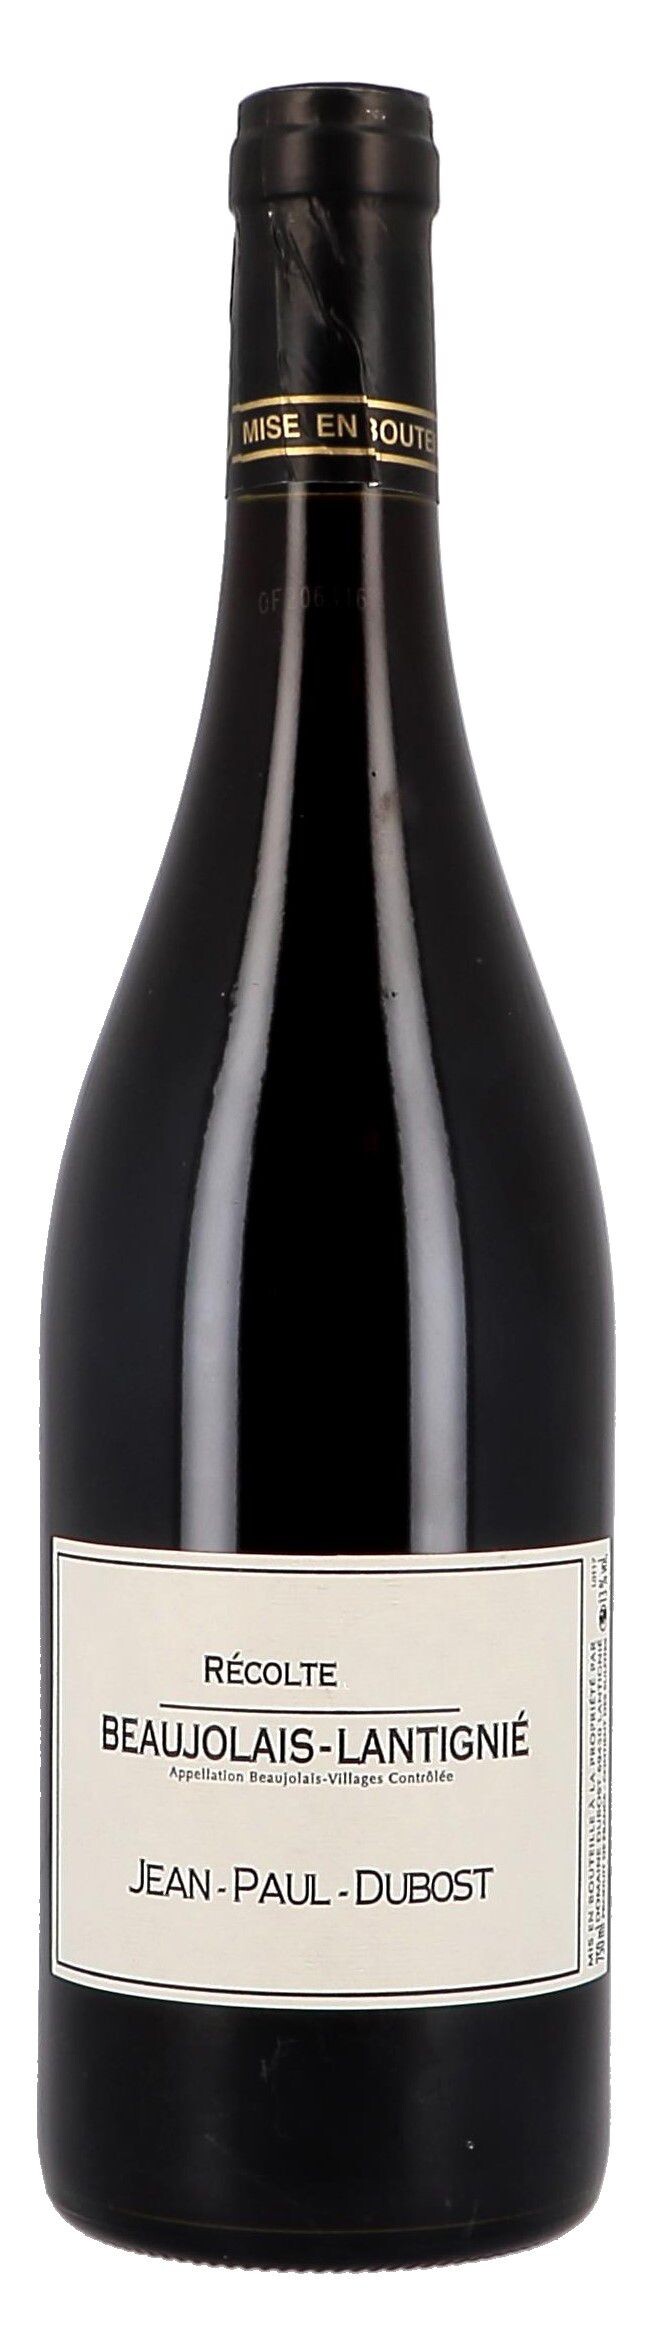 Beaujolais - Latignié Chardonnay 75cl 2017 Jean-Paul Dubost (Wijnen)